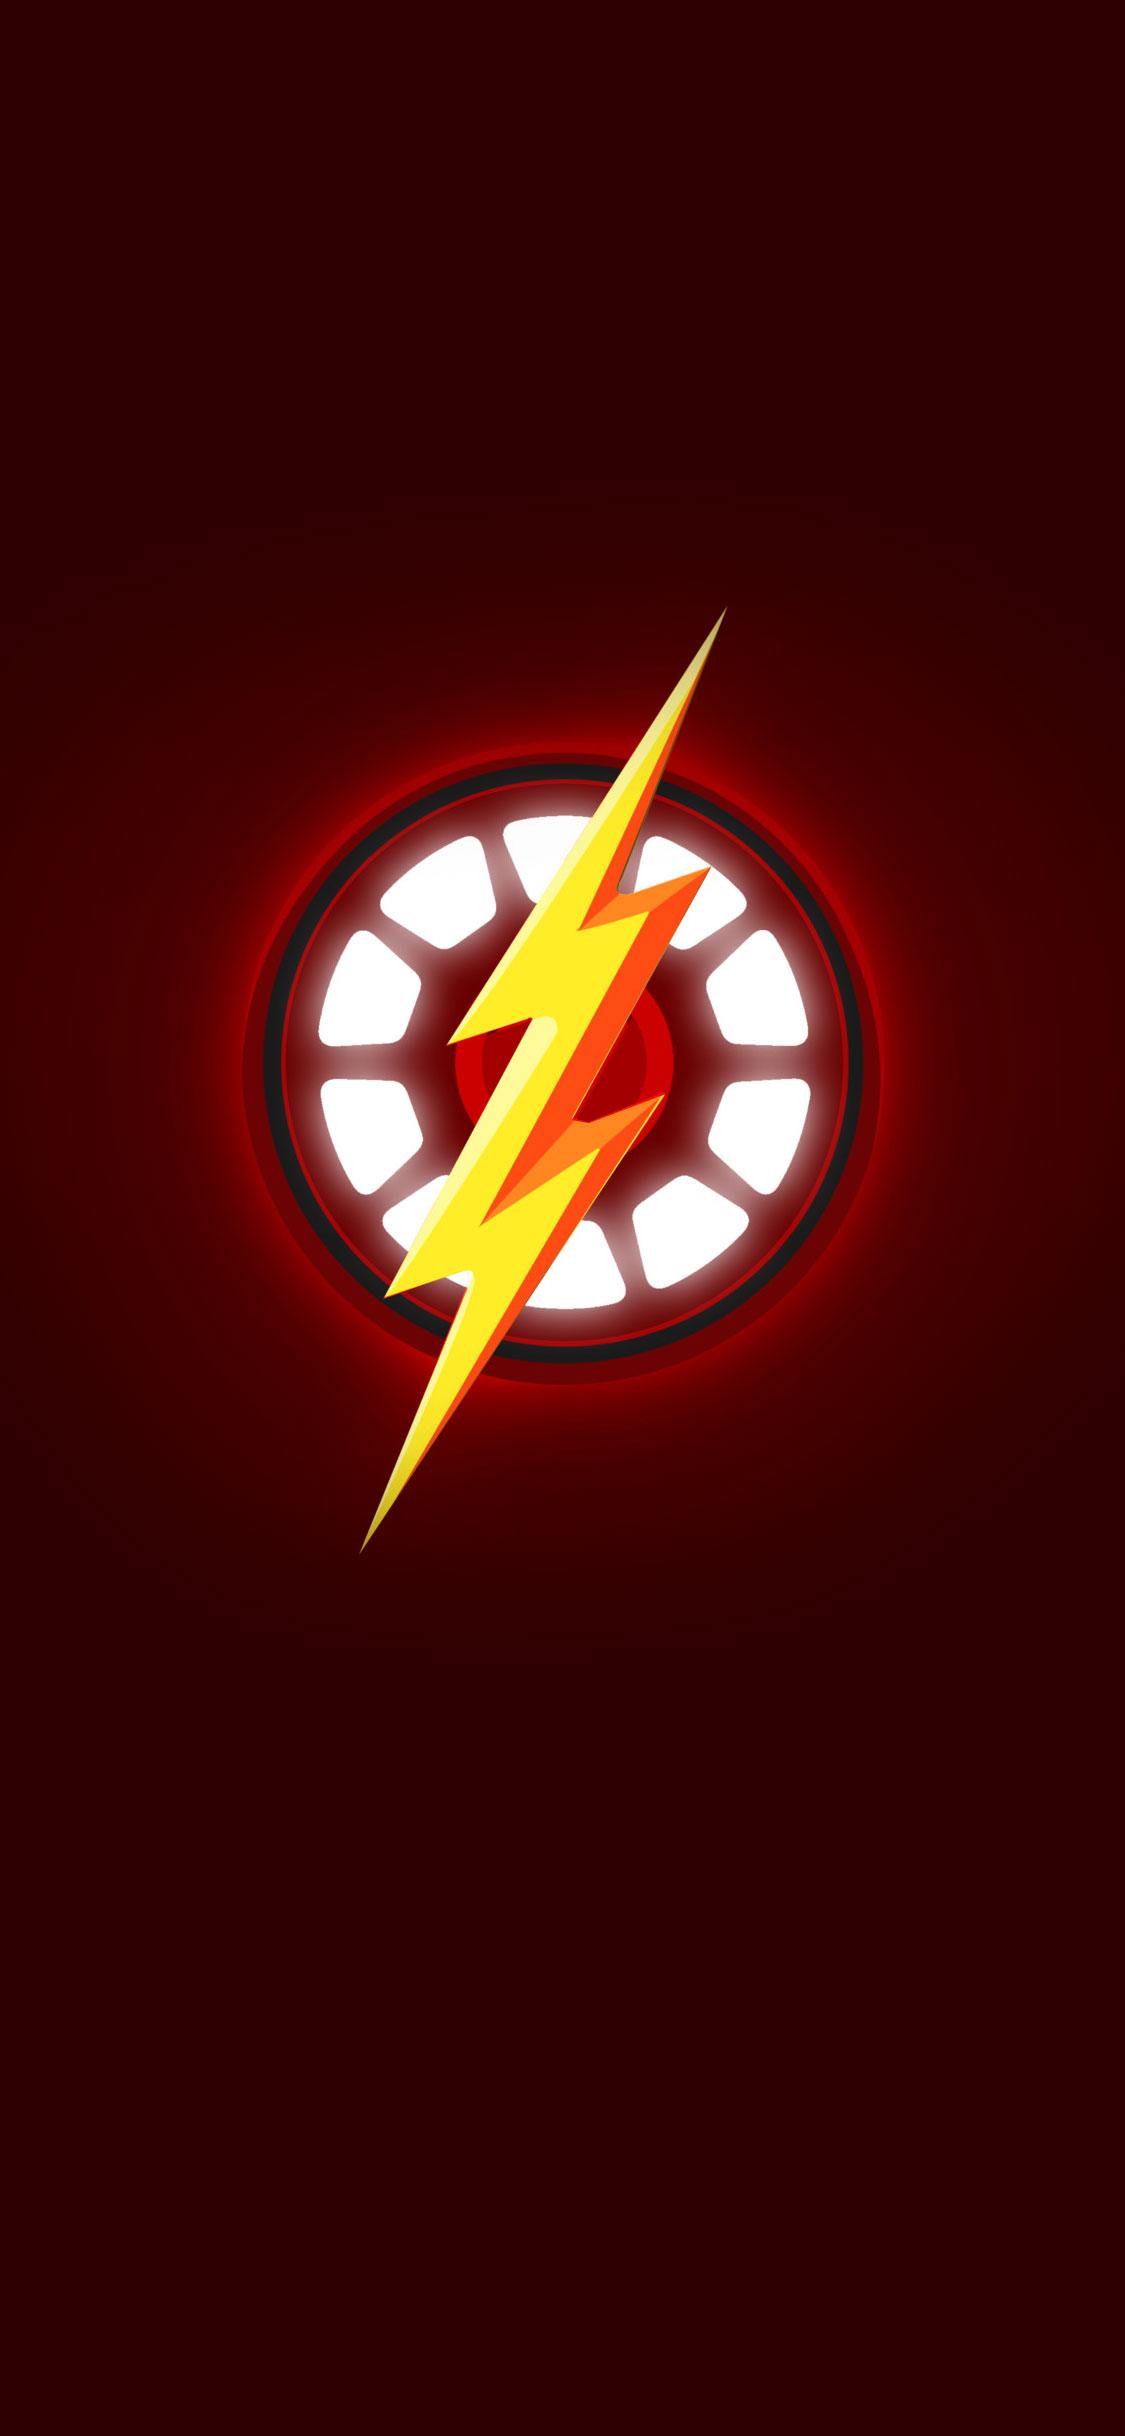 Wallpaper Flash Poster The Flash Flash Barry Allen Plastique Poster  Background  Download Free Image